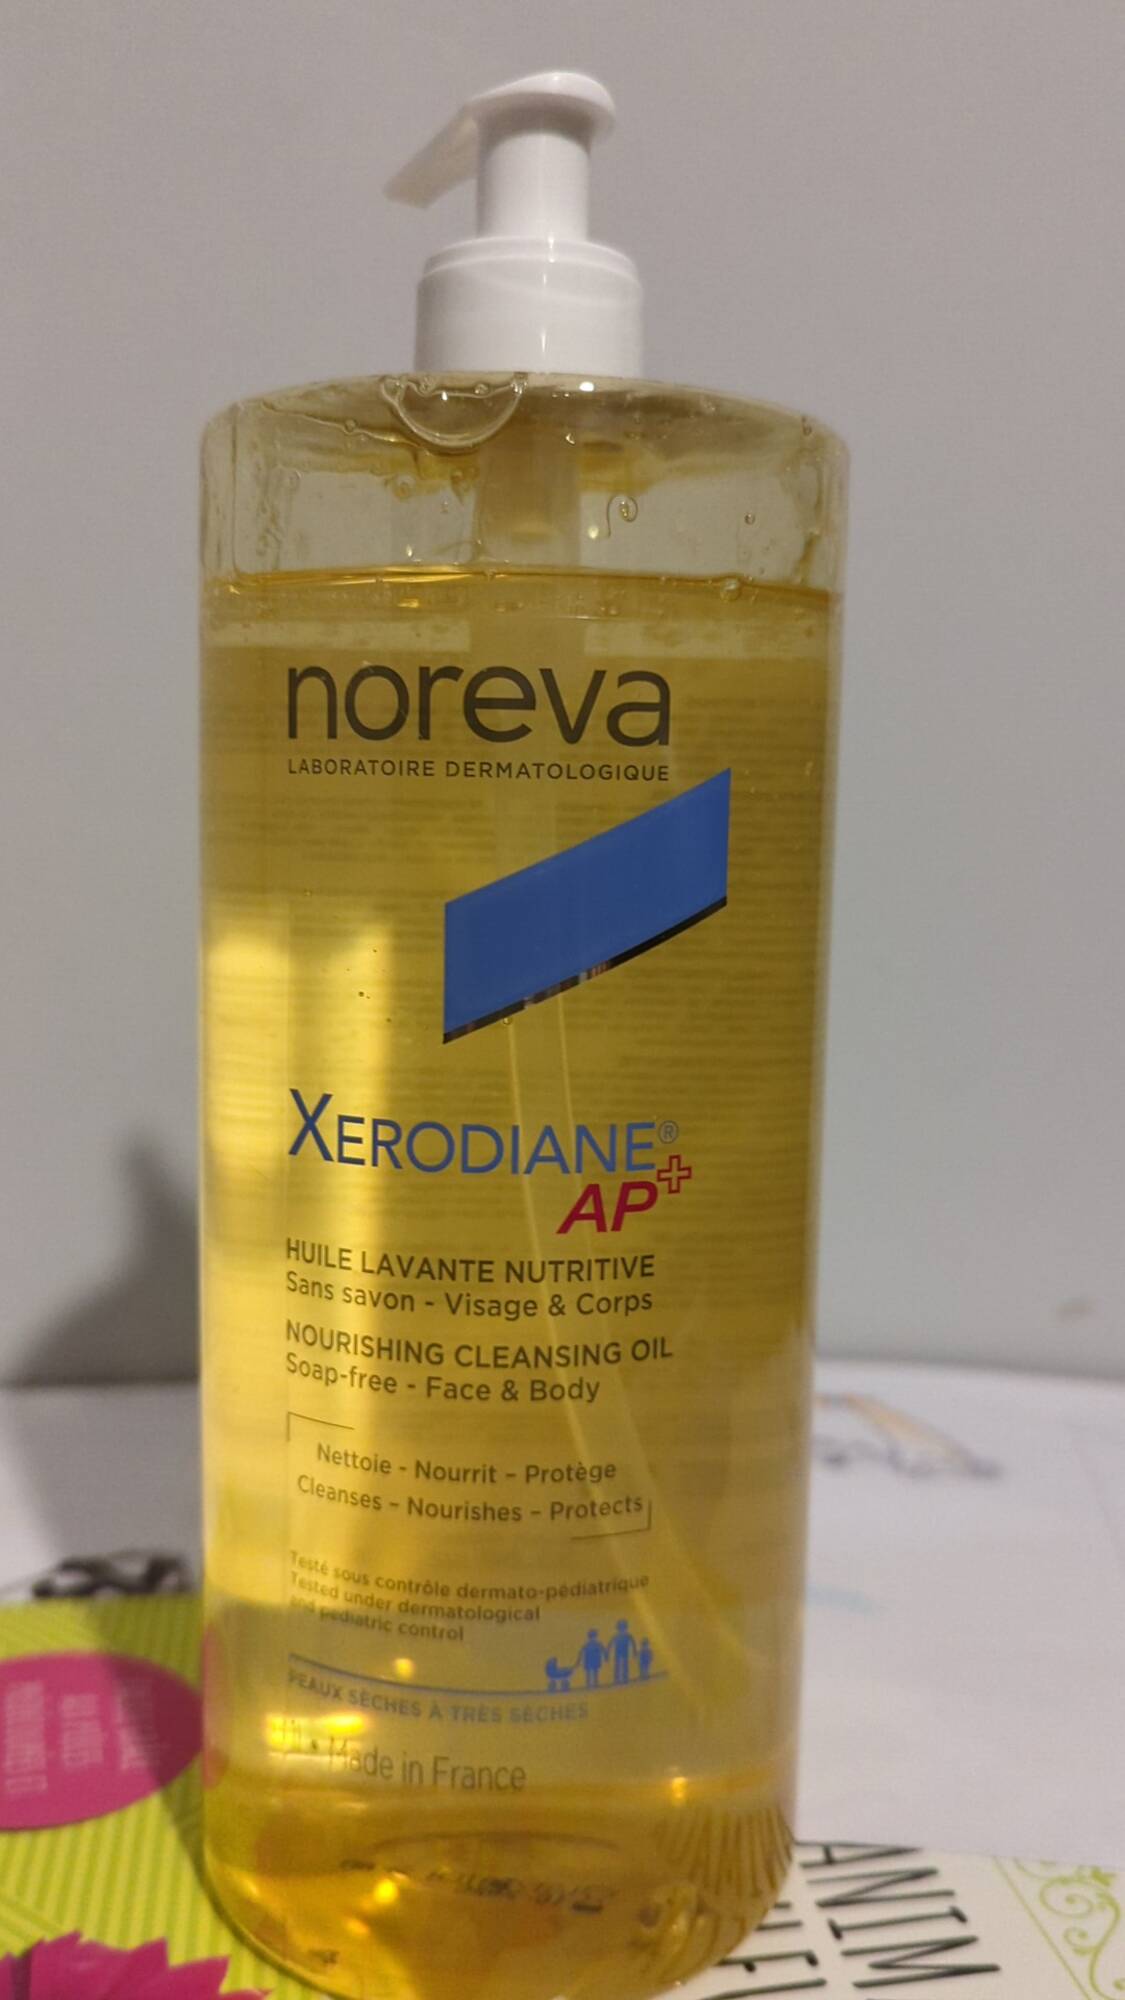 NOREVA - Xerodiane AP+ - Huile lavante nutritive